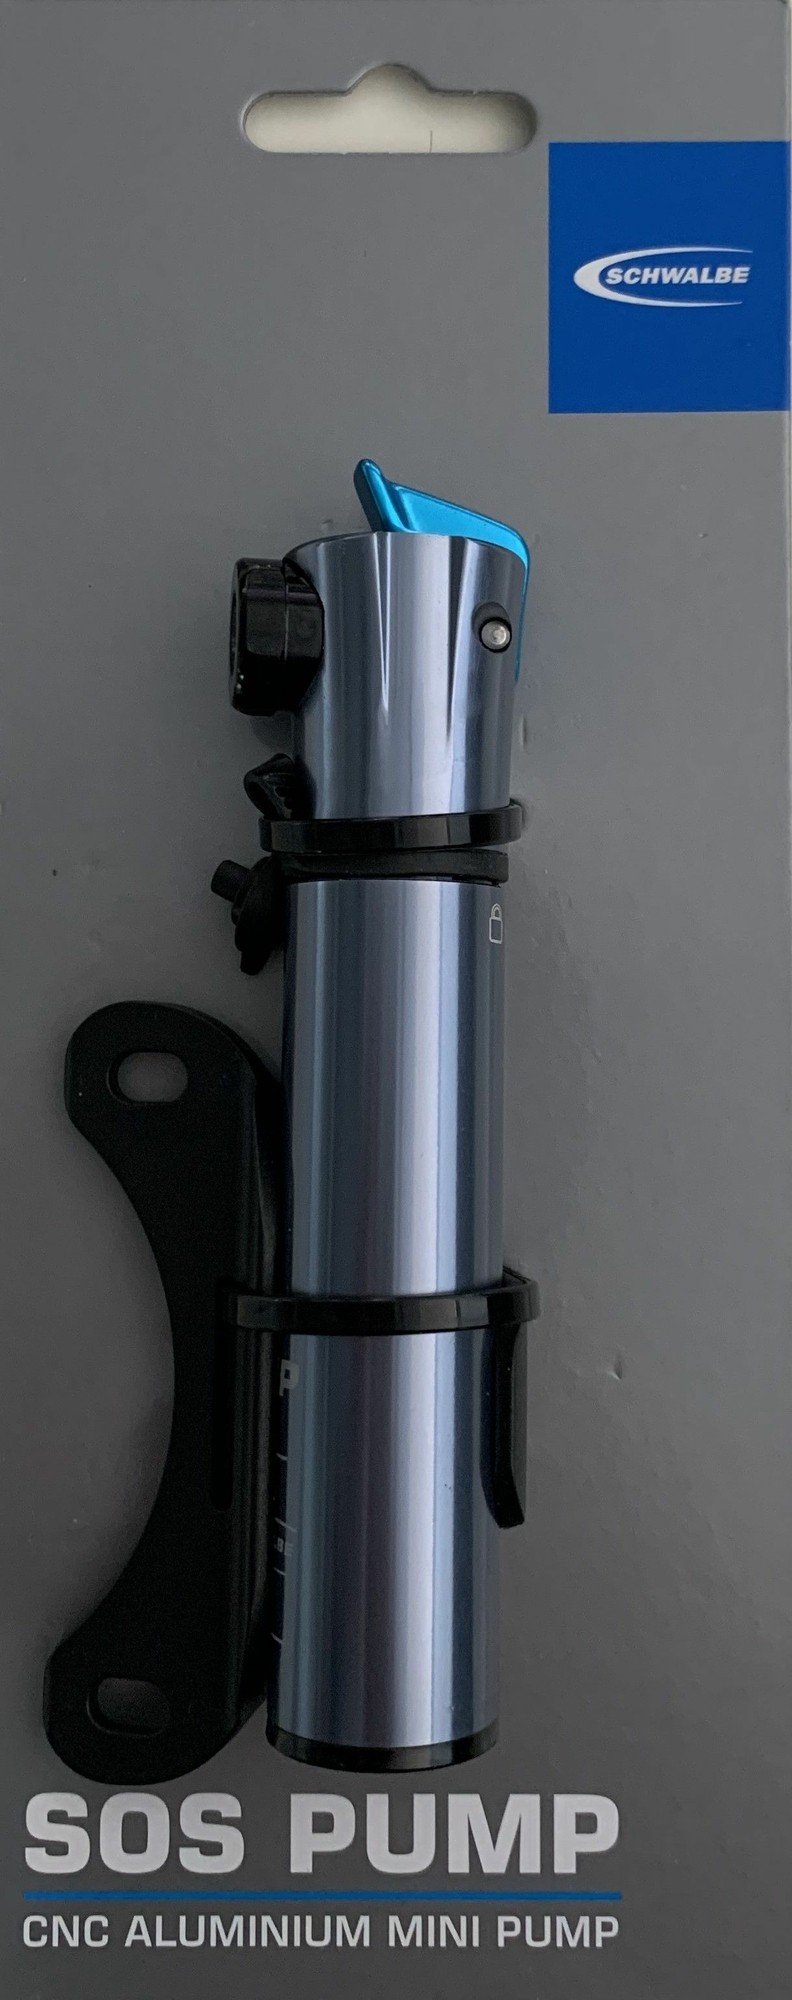 Fahrradteile/Pumpen: Schwalbe  Minipumpe SOS Pump 6081  metallic